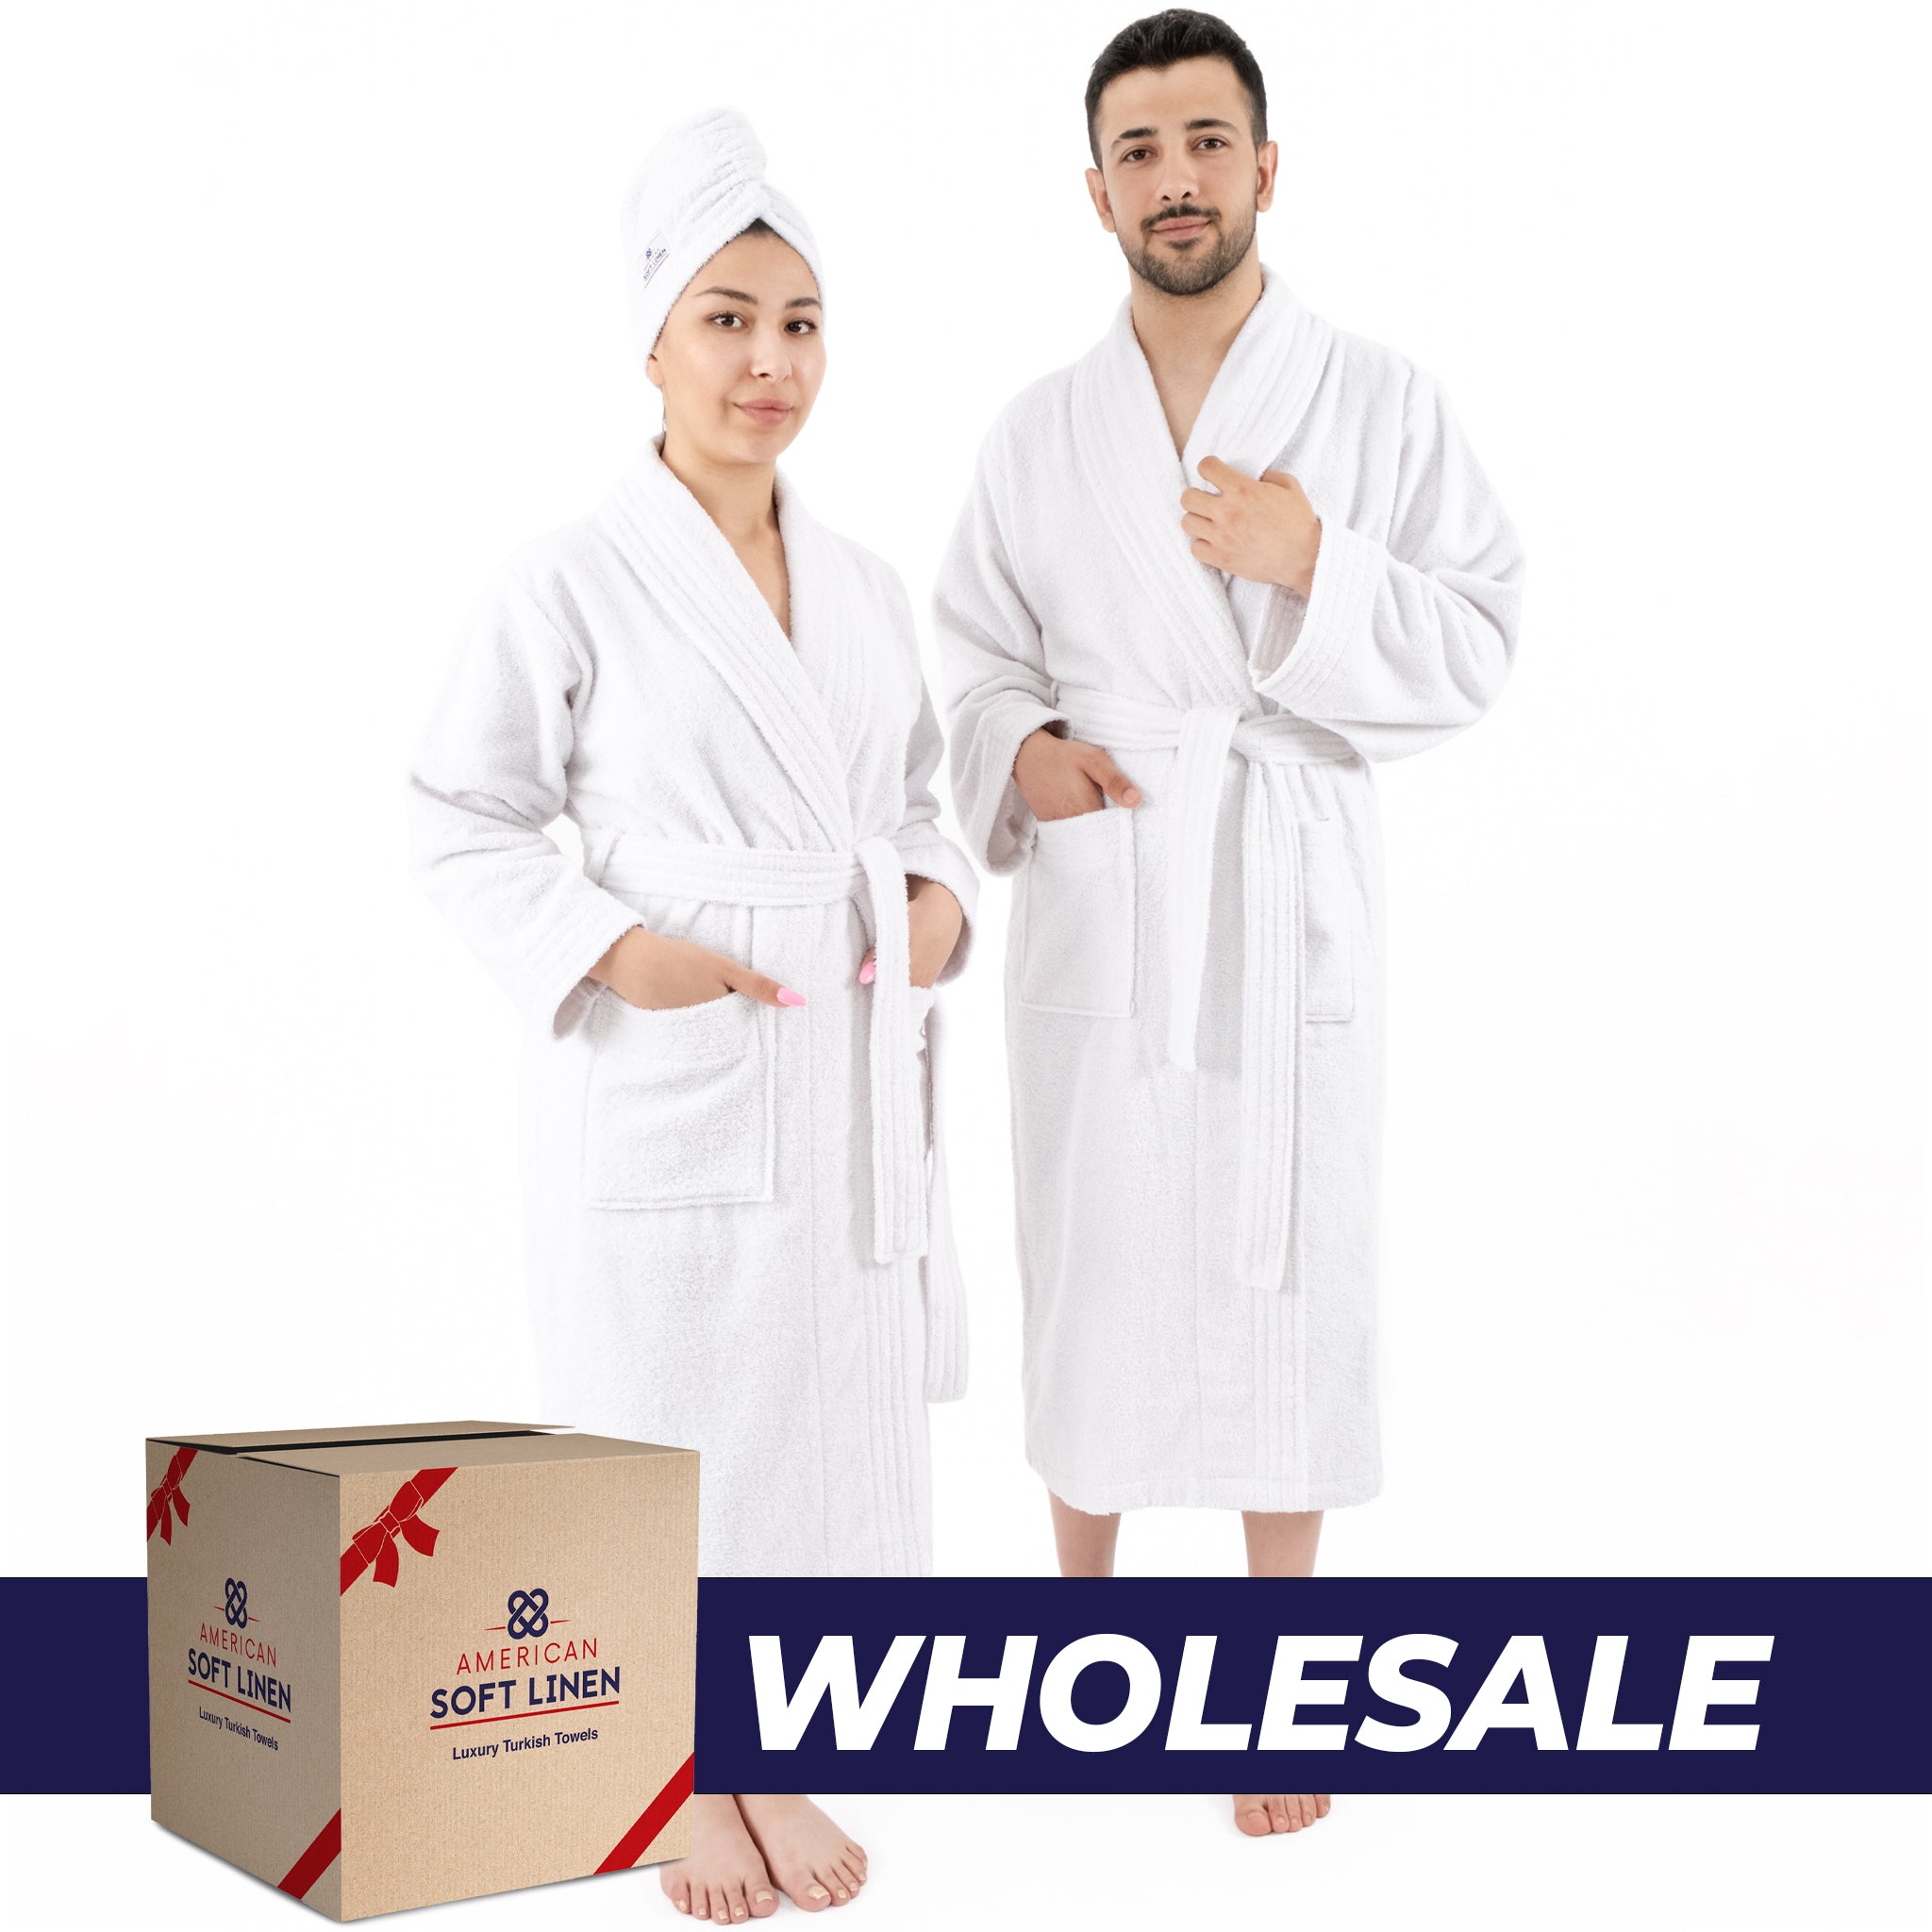 American Soft Linen 100% Cotton Bathrobes for Women and Men, Soft, Lightweight, Wholesale Bathrobes White S-M, 0